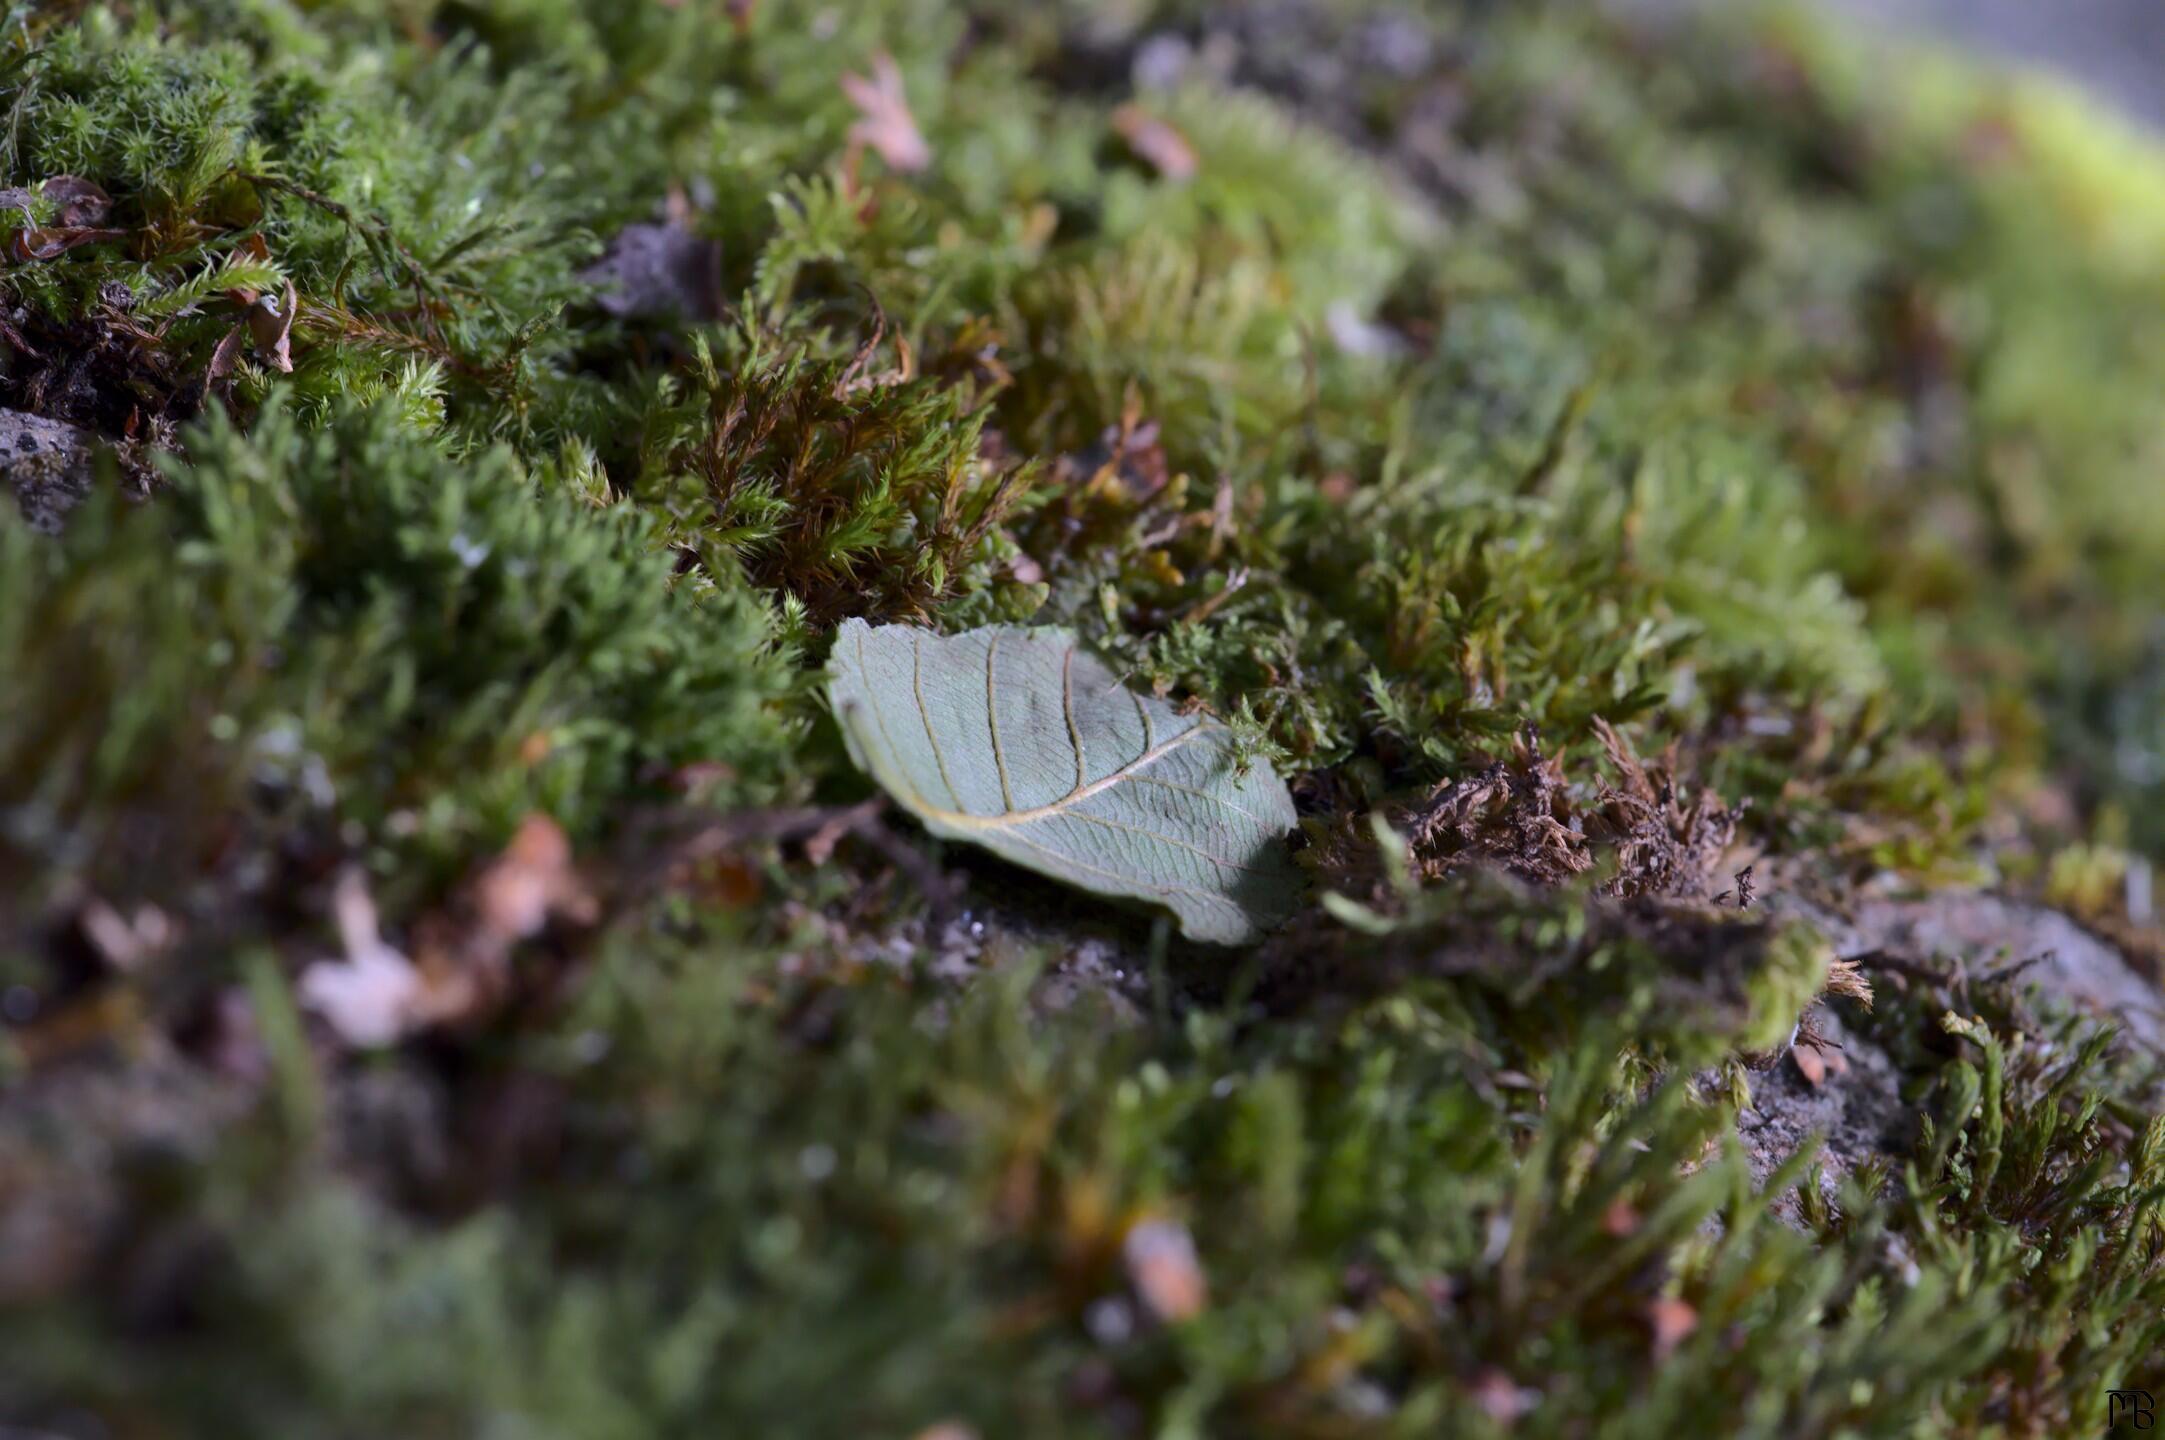 Leaf upside down on rock with lichen